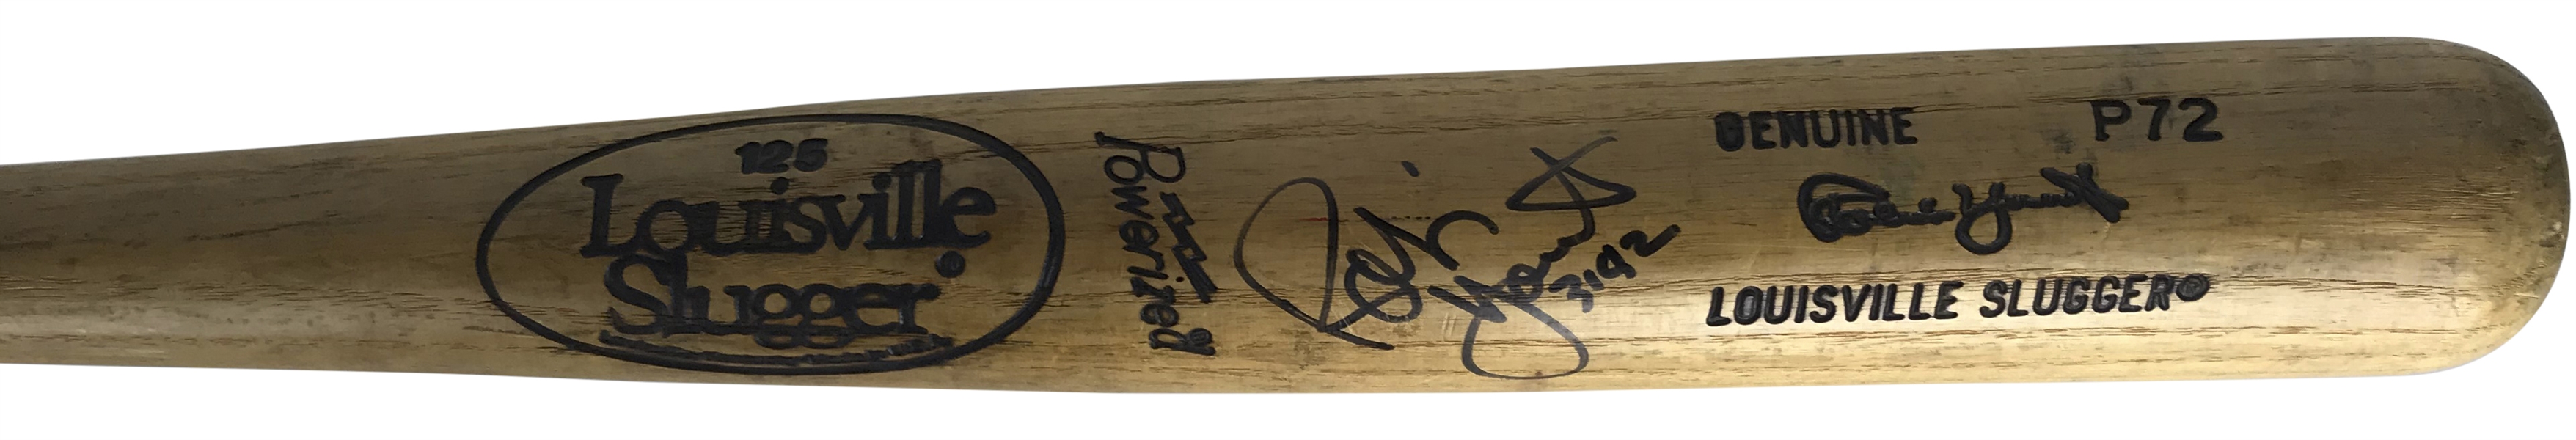 Robin Yount Signed & Game Used 1986-89 Baseball Bat - PSA/DNA GU 10!